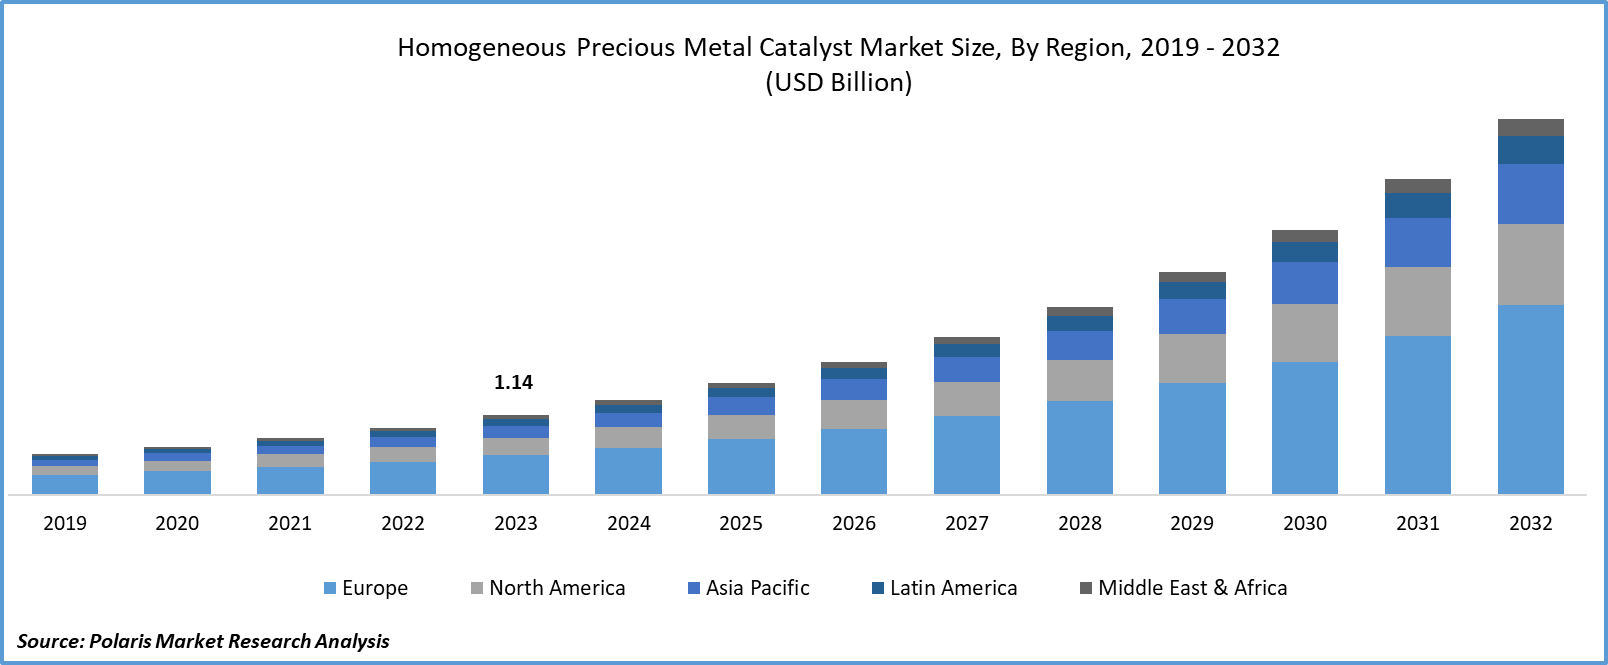 Homogeneous Precious Metal Catalyst Market Size